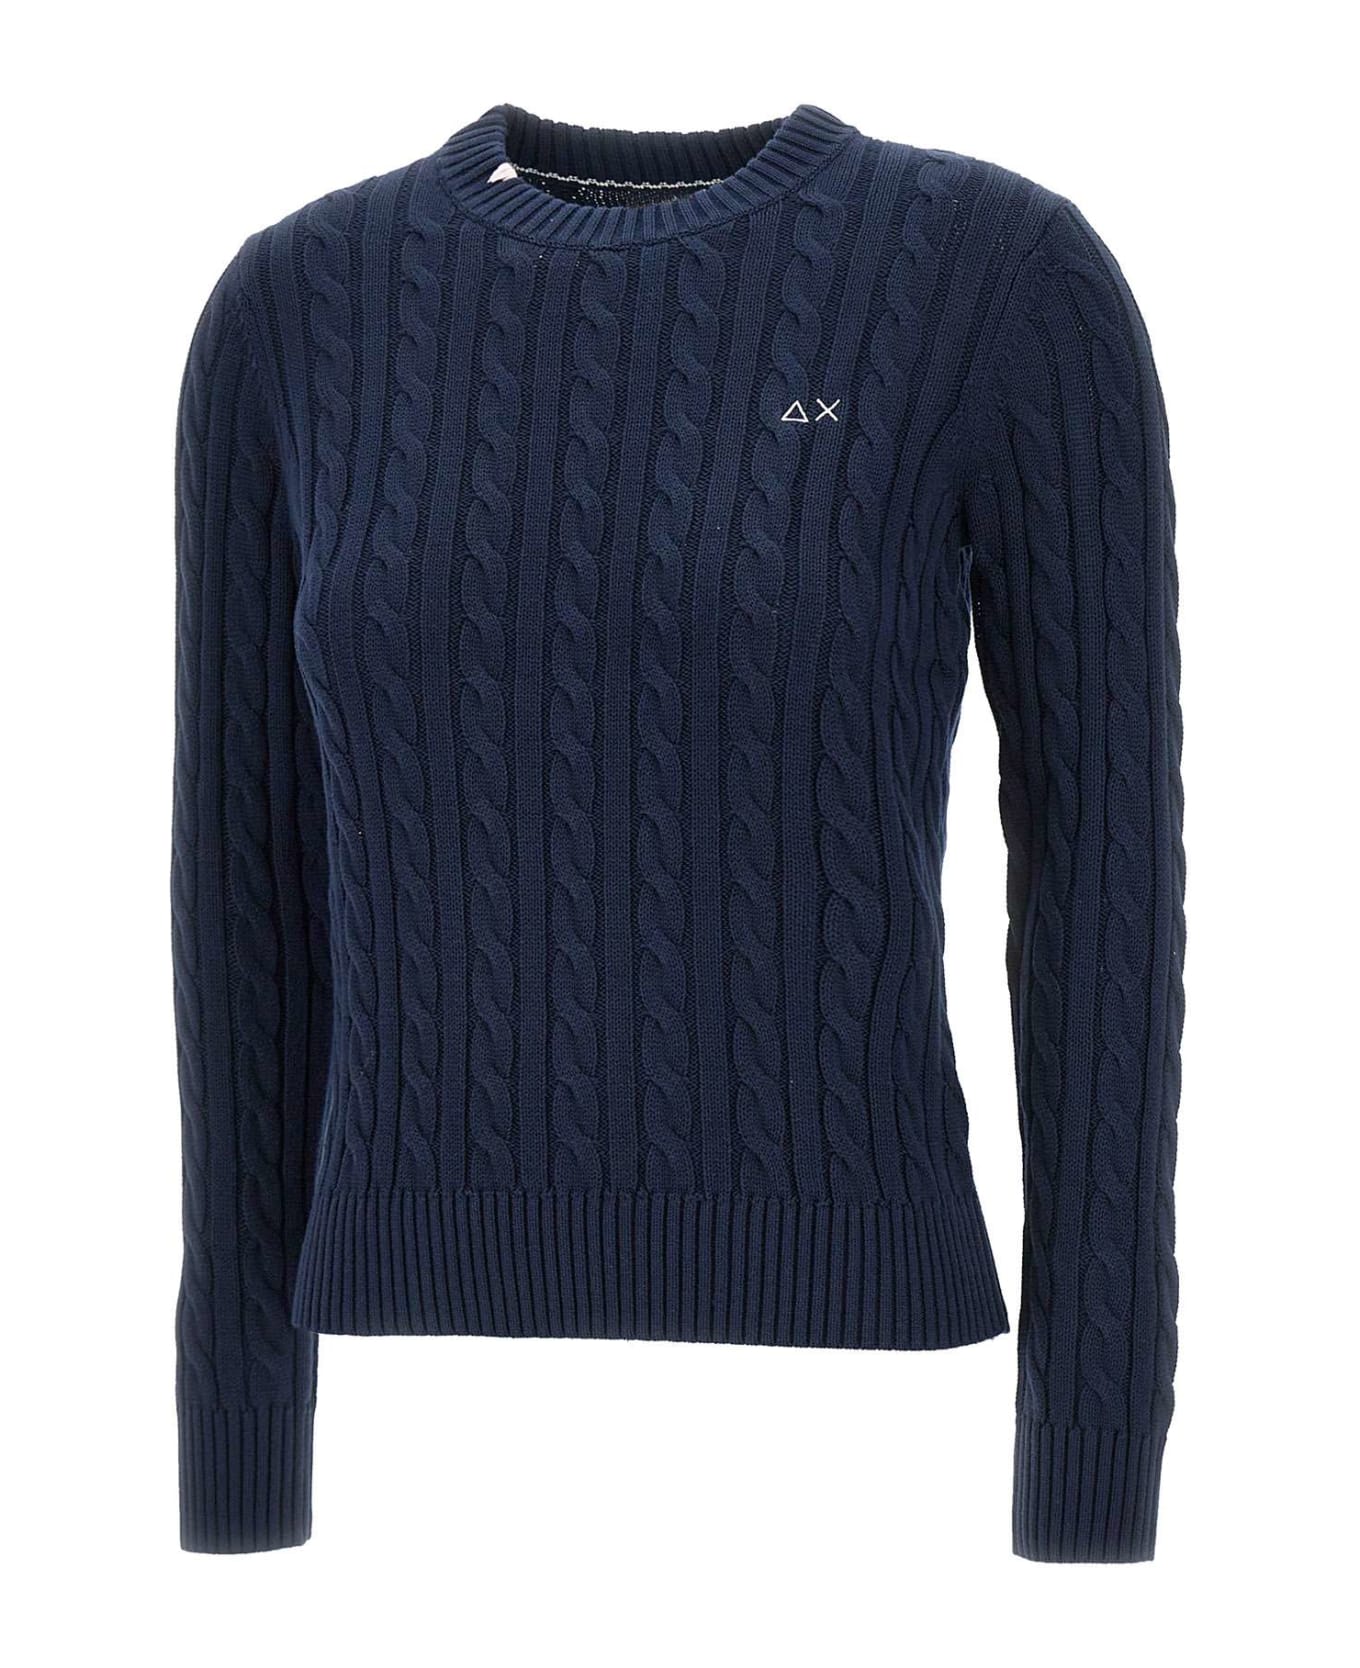 Sun 68 'round Neck Cable' Cotton Sweater